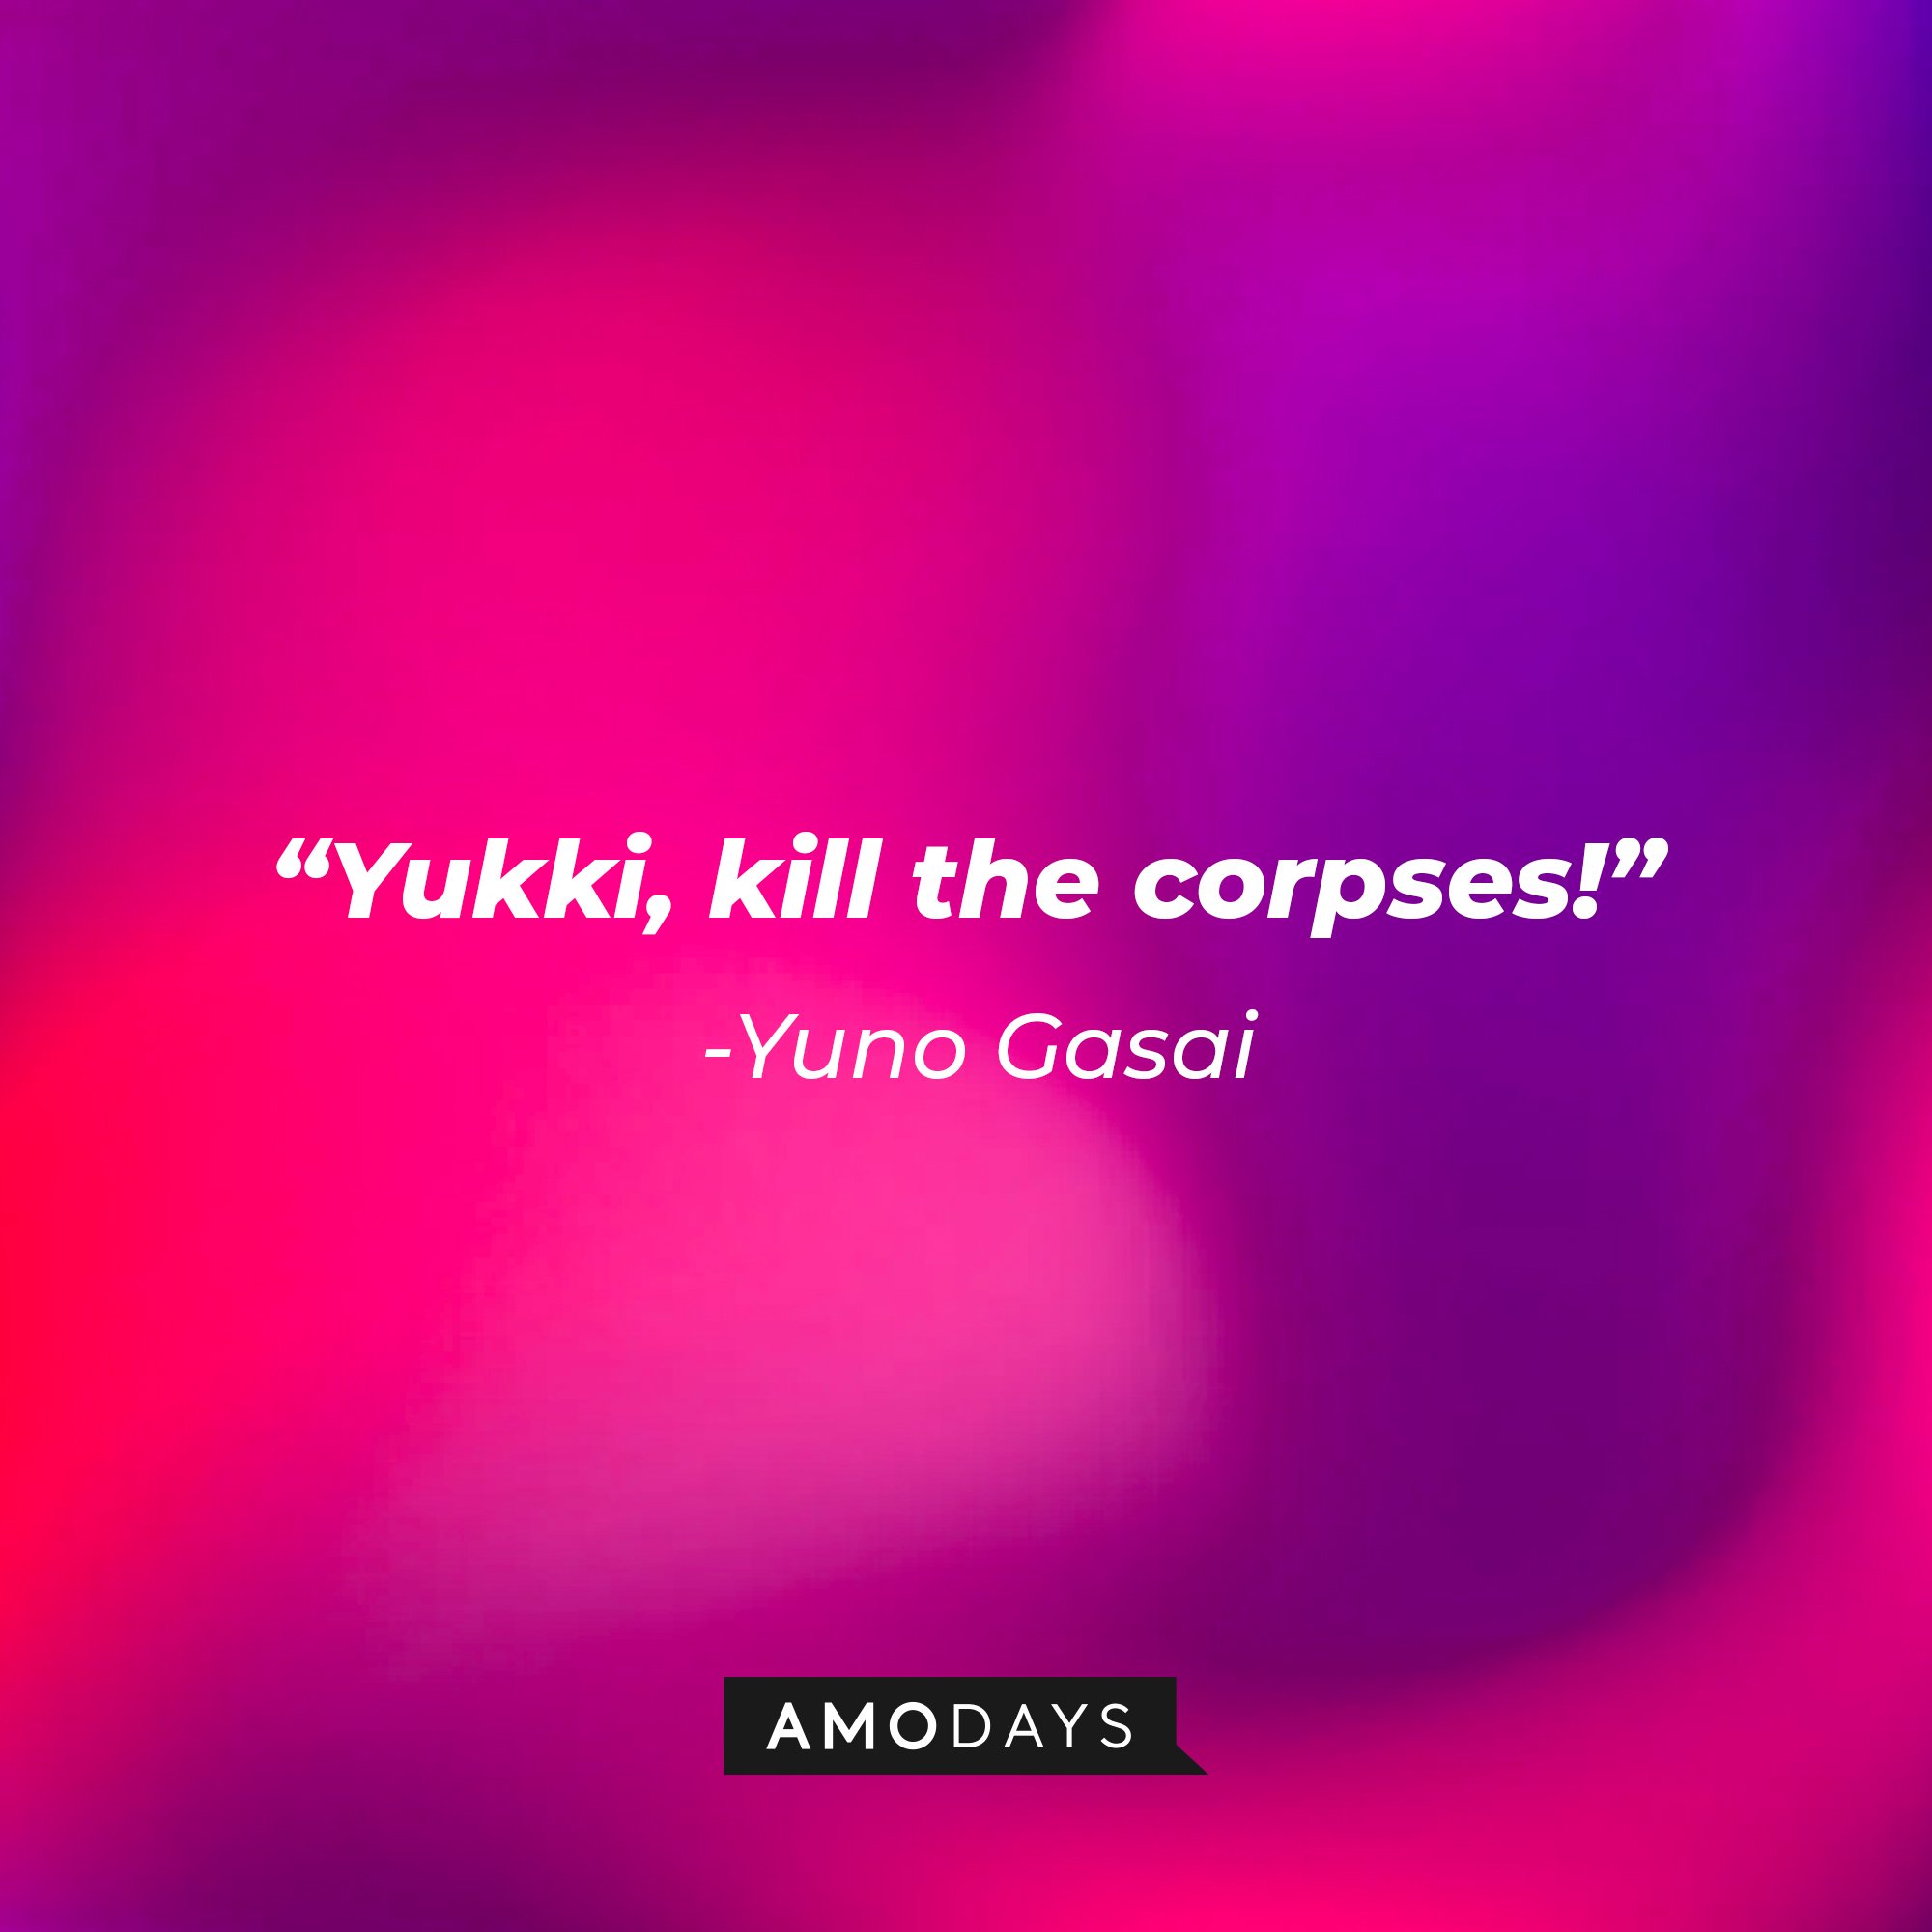 Yuno Gasai’s quote: “Yukki, kill the corpses!” | Image: AmoDays  